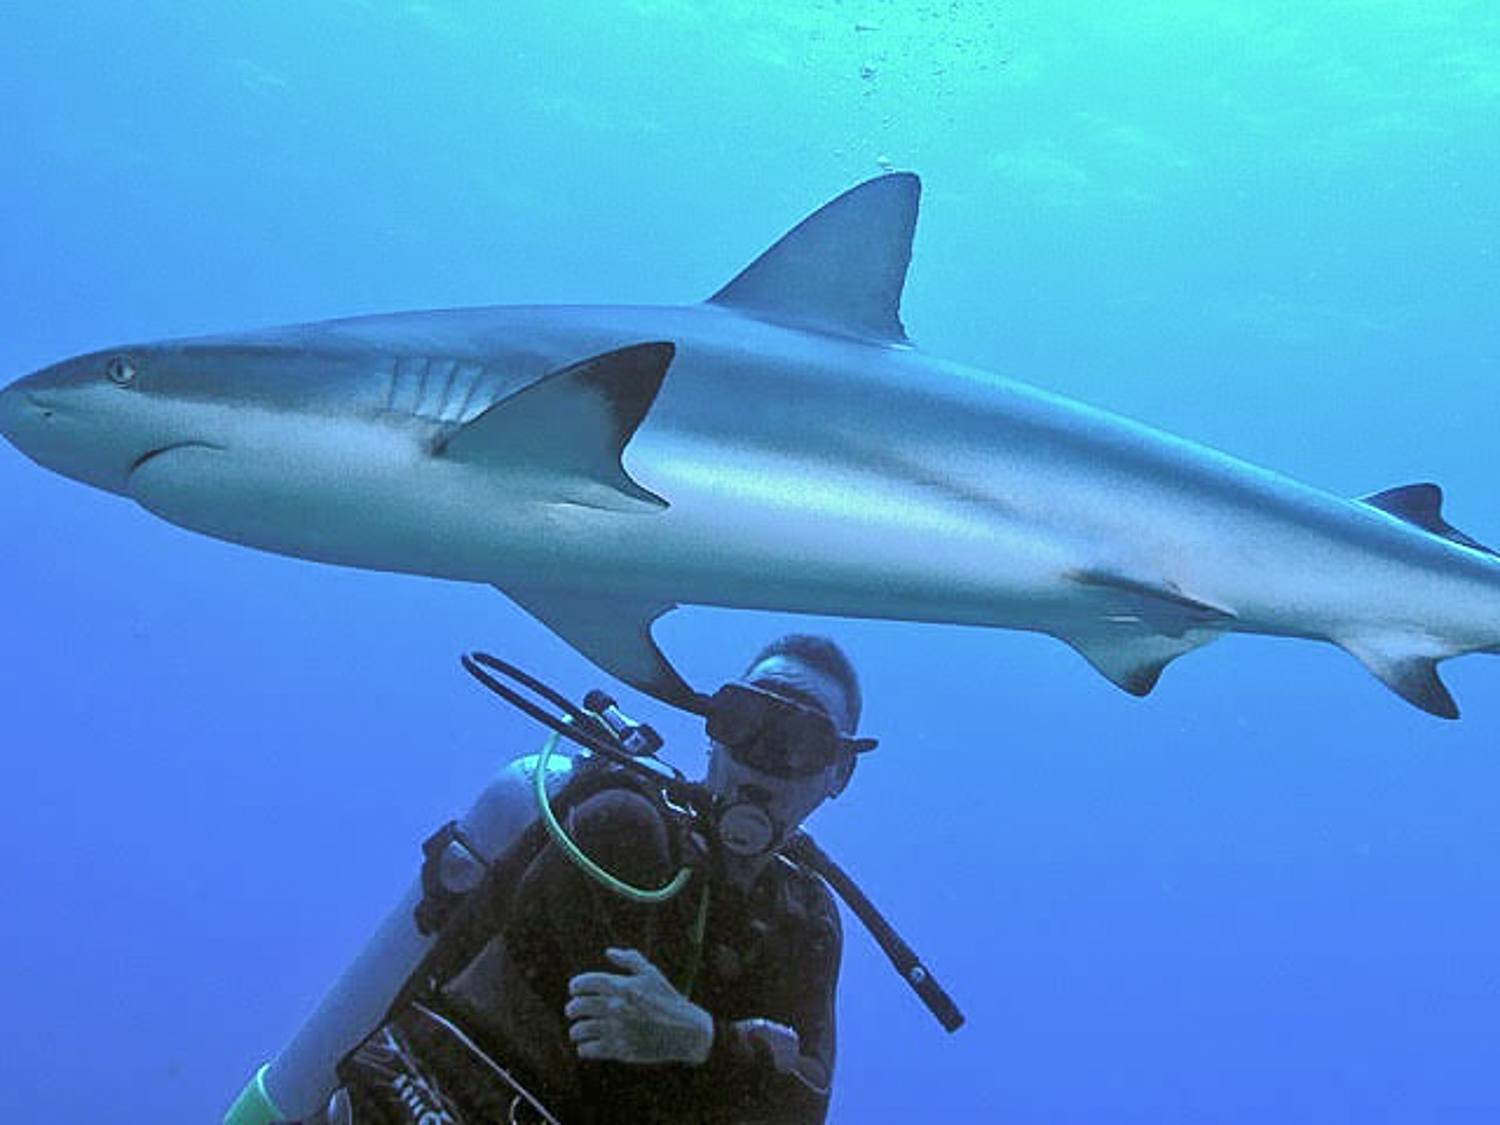 Mark scuba diving right next to a shark!